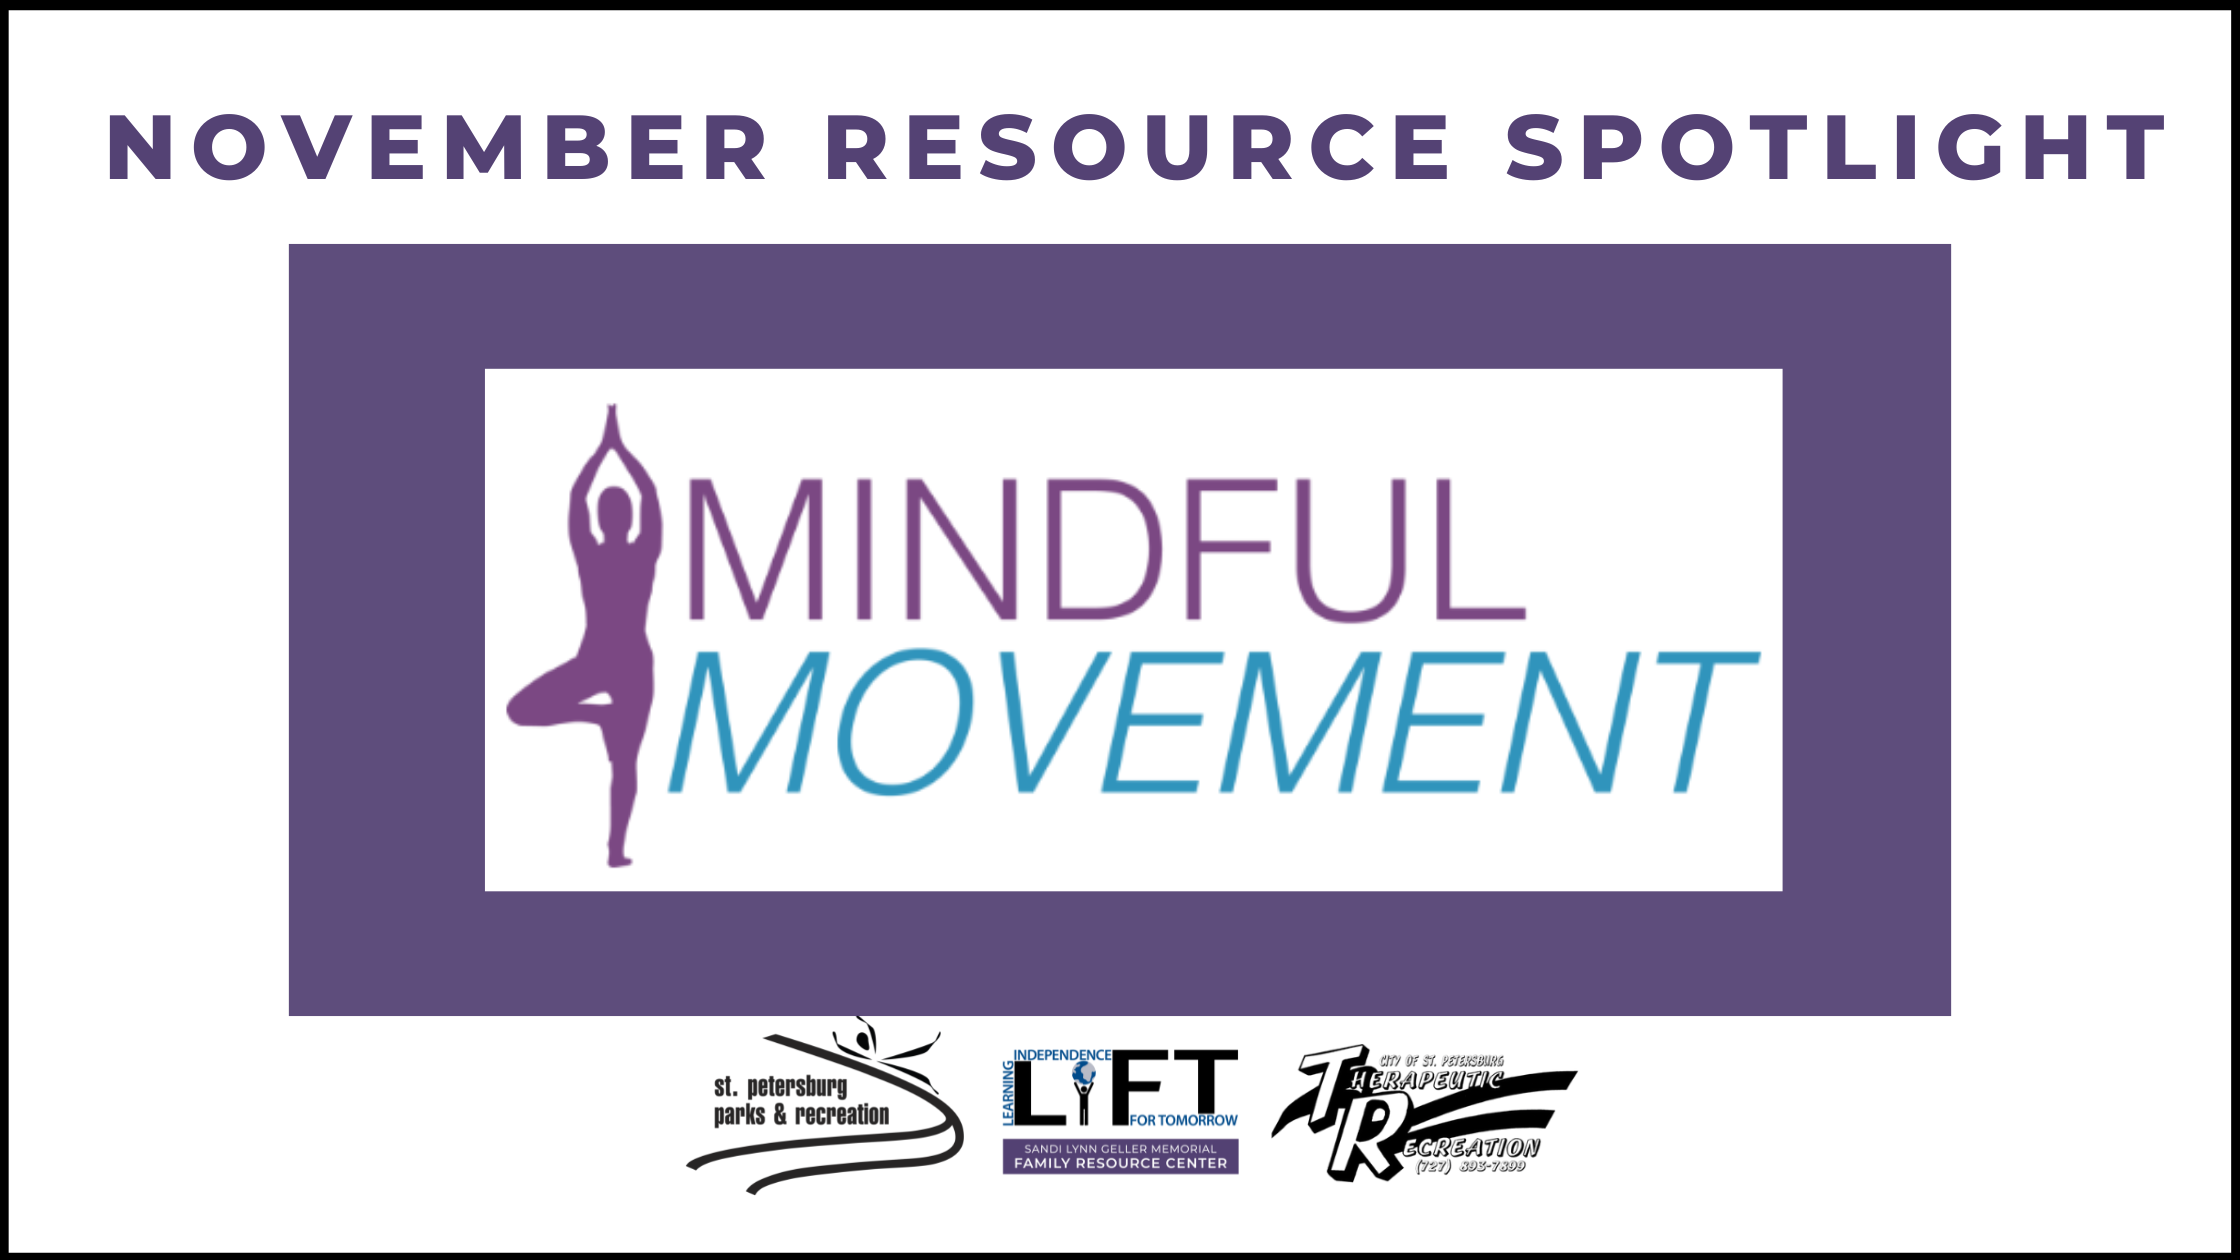 November Resource Spotlight: Mindful Movement